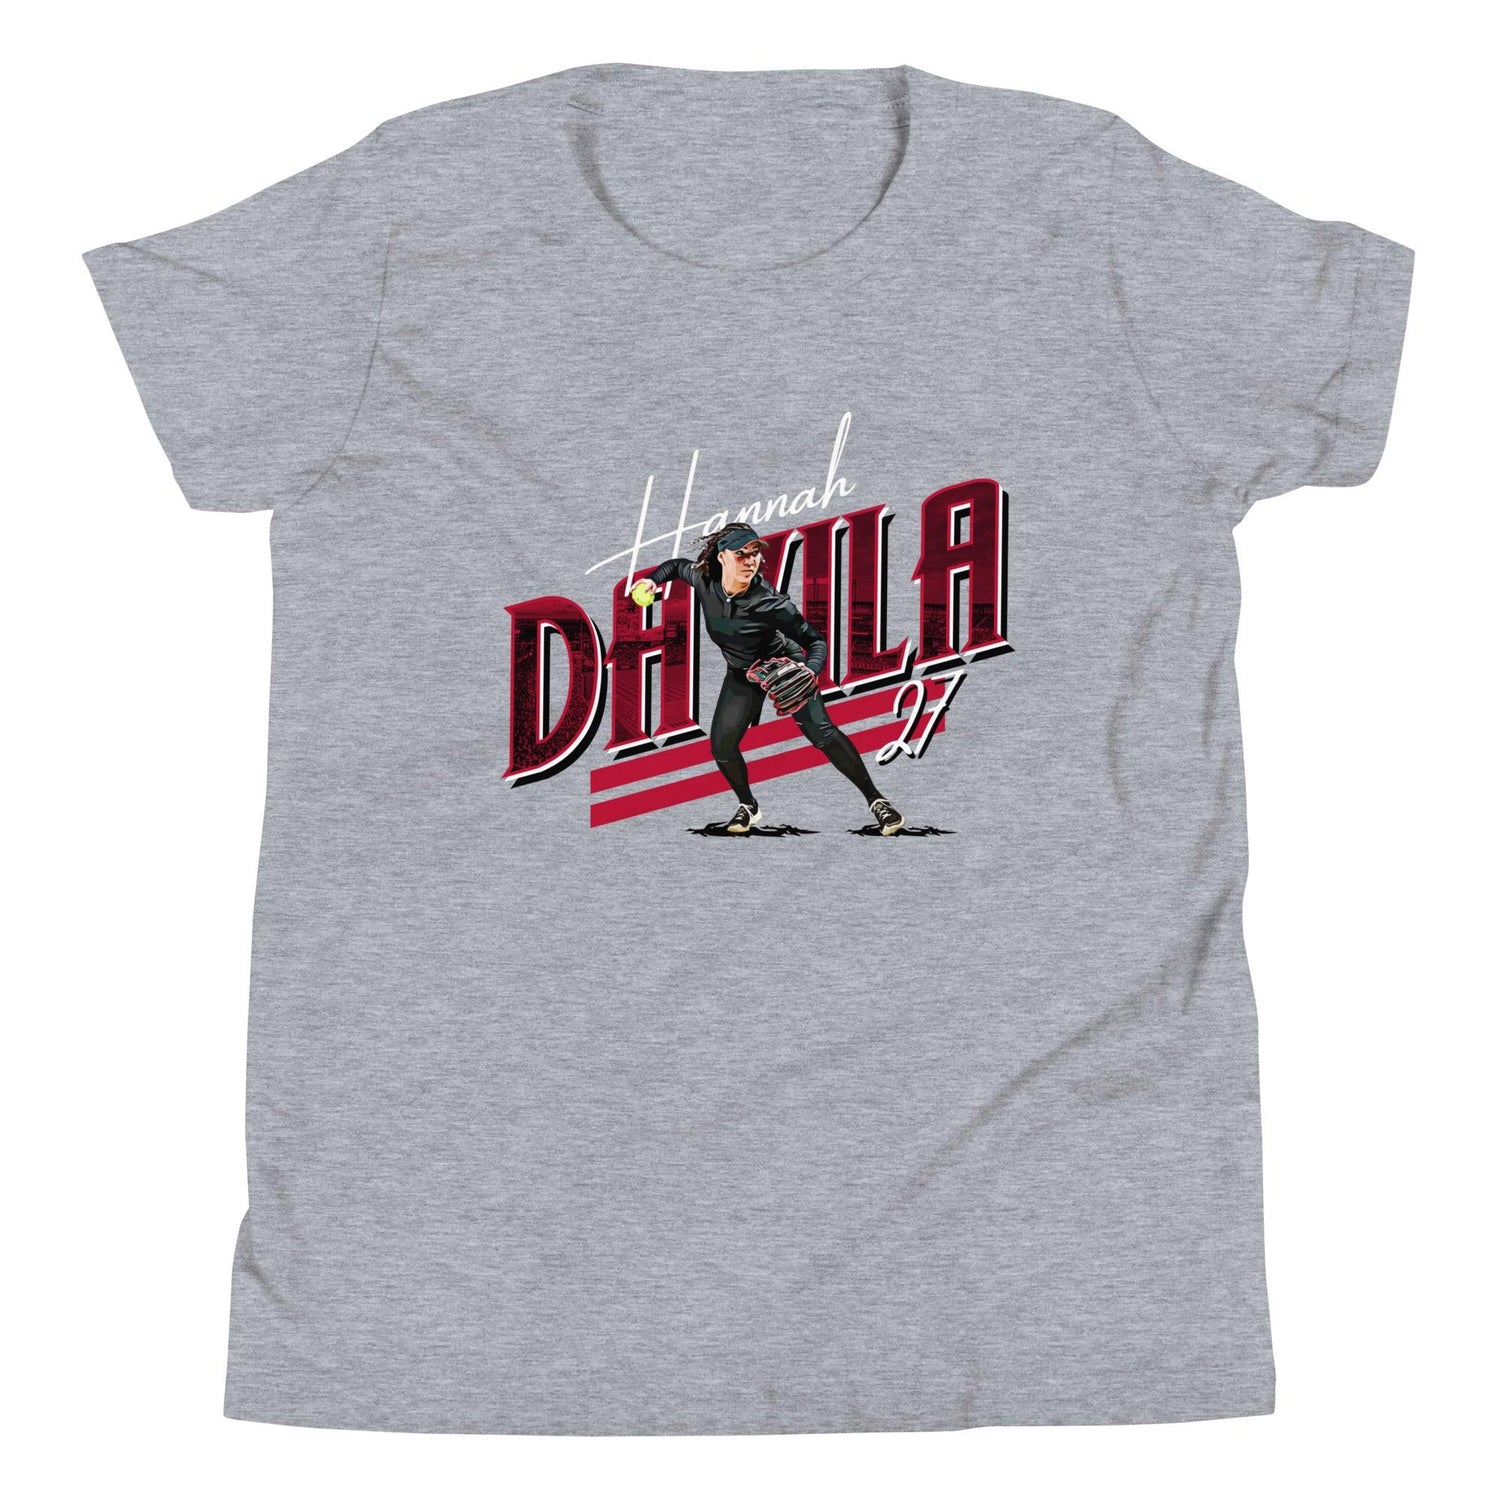 Hannah Davila "Gameday" Youth T-Shirt - Fan Arch